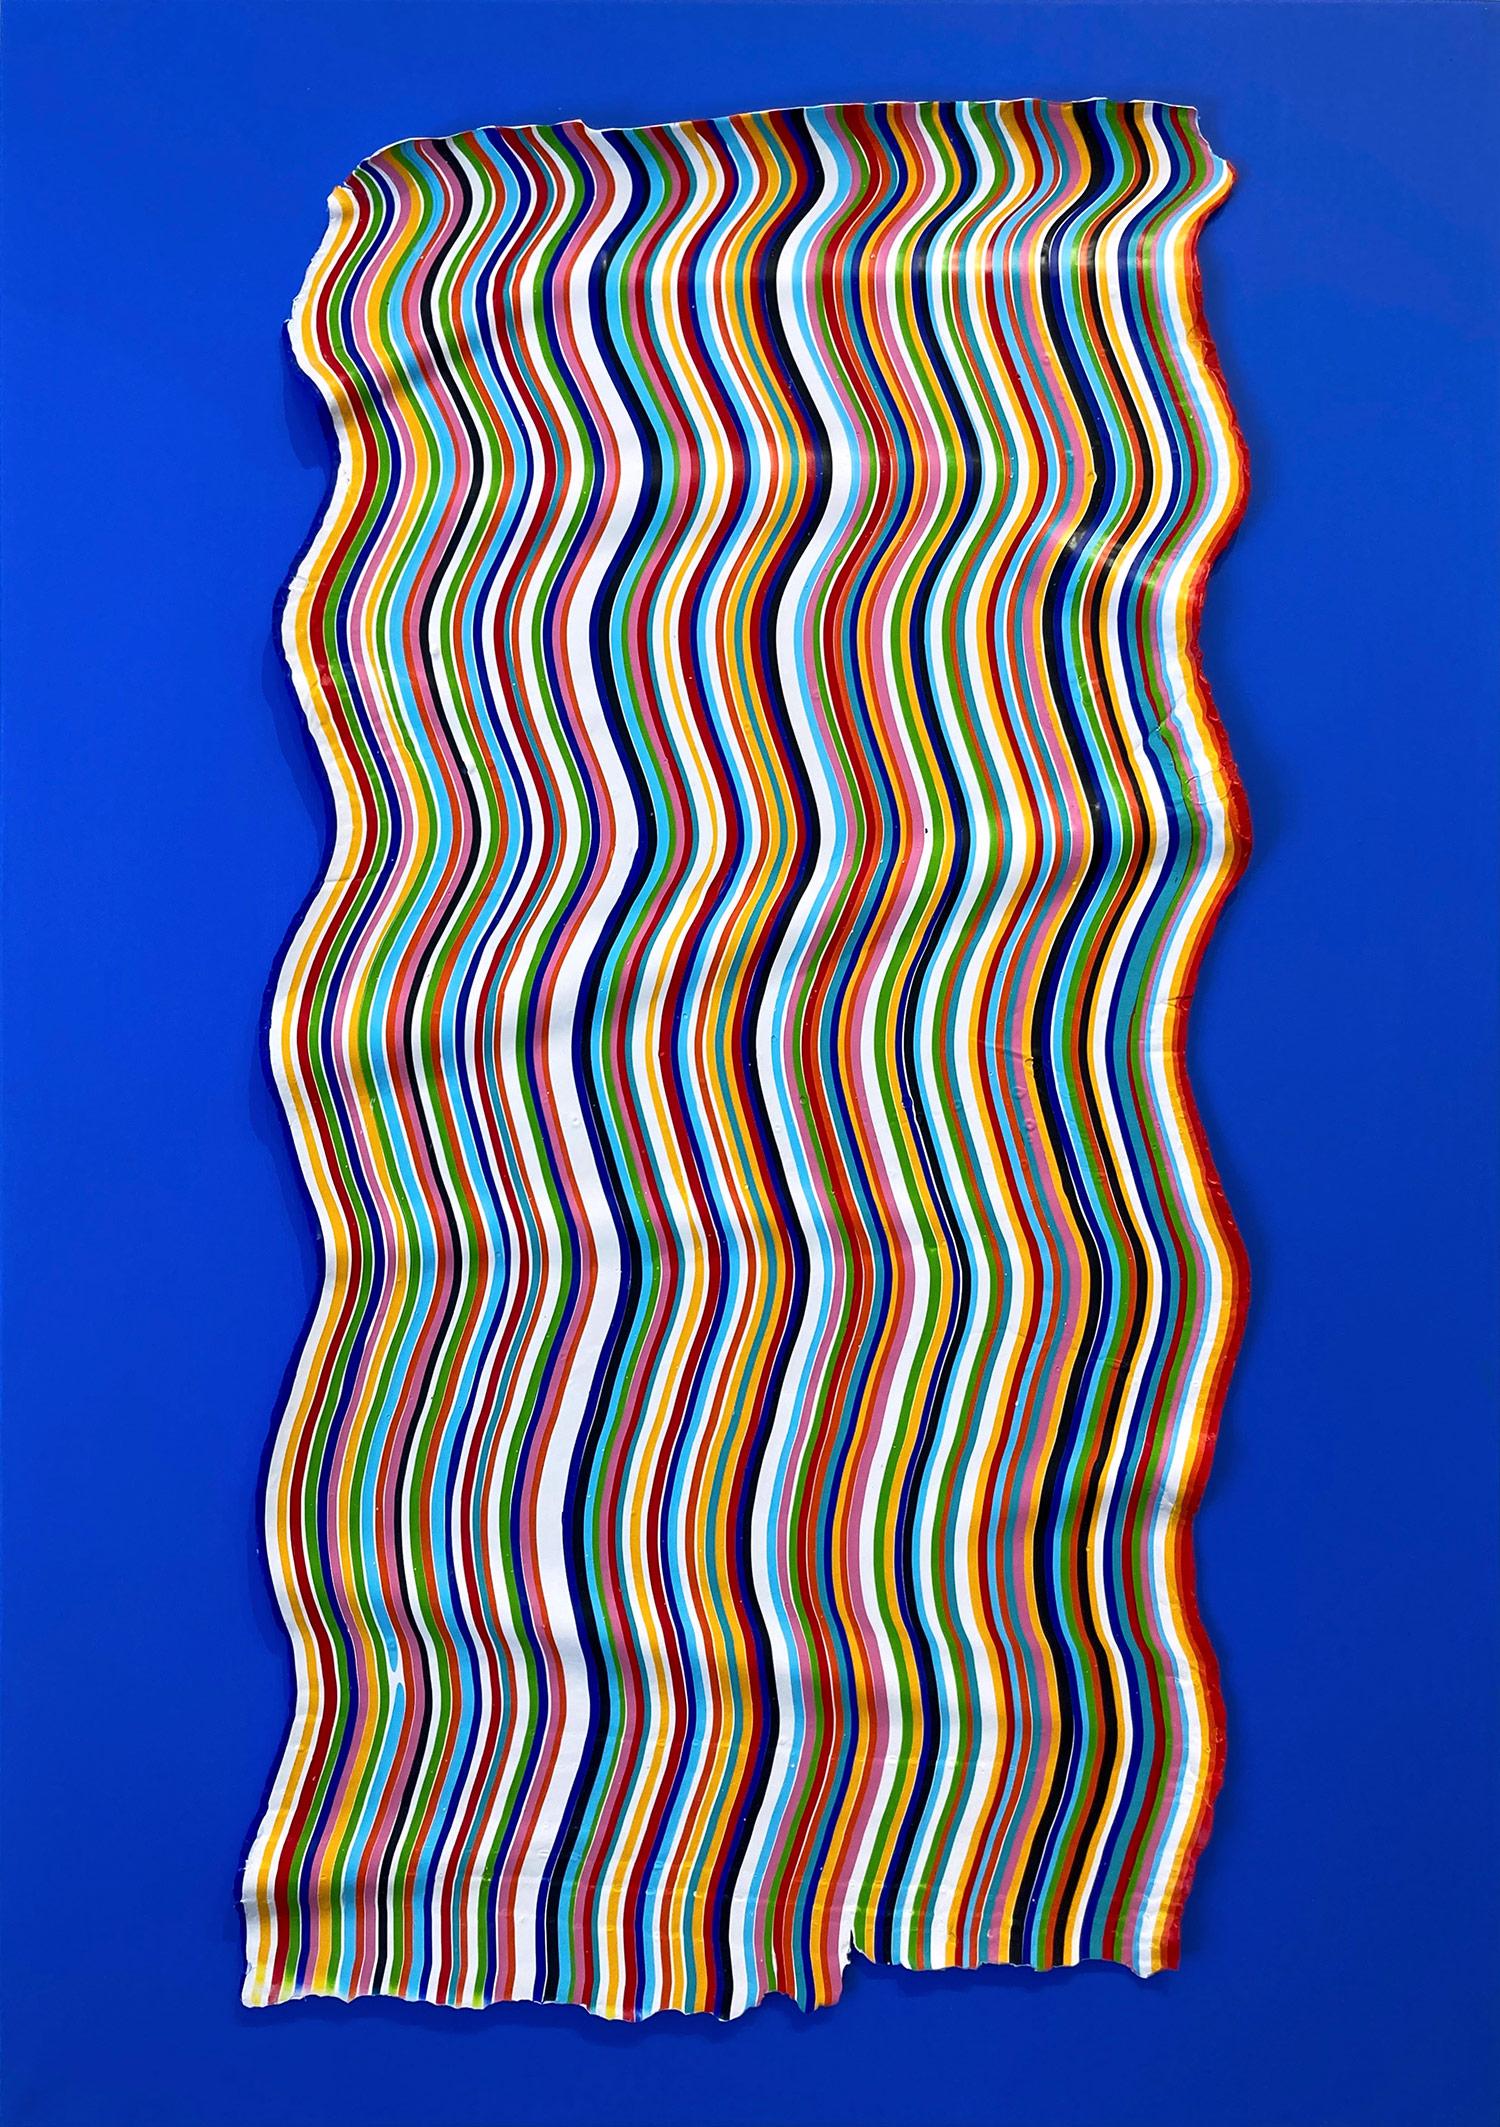 Abstract Painting Derick Smith - Peinture acrylique abstraite colorée "Don't Go Back to Sleep" sur toile